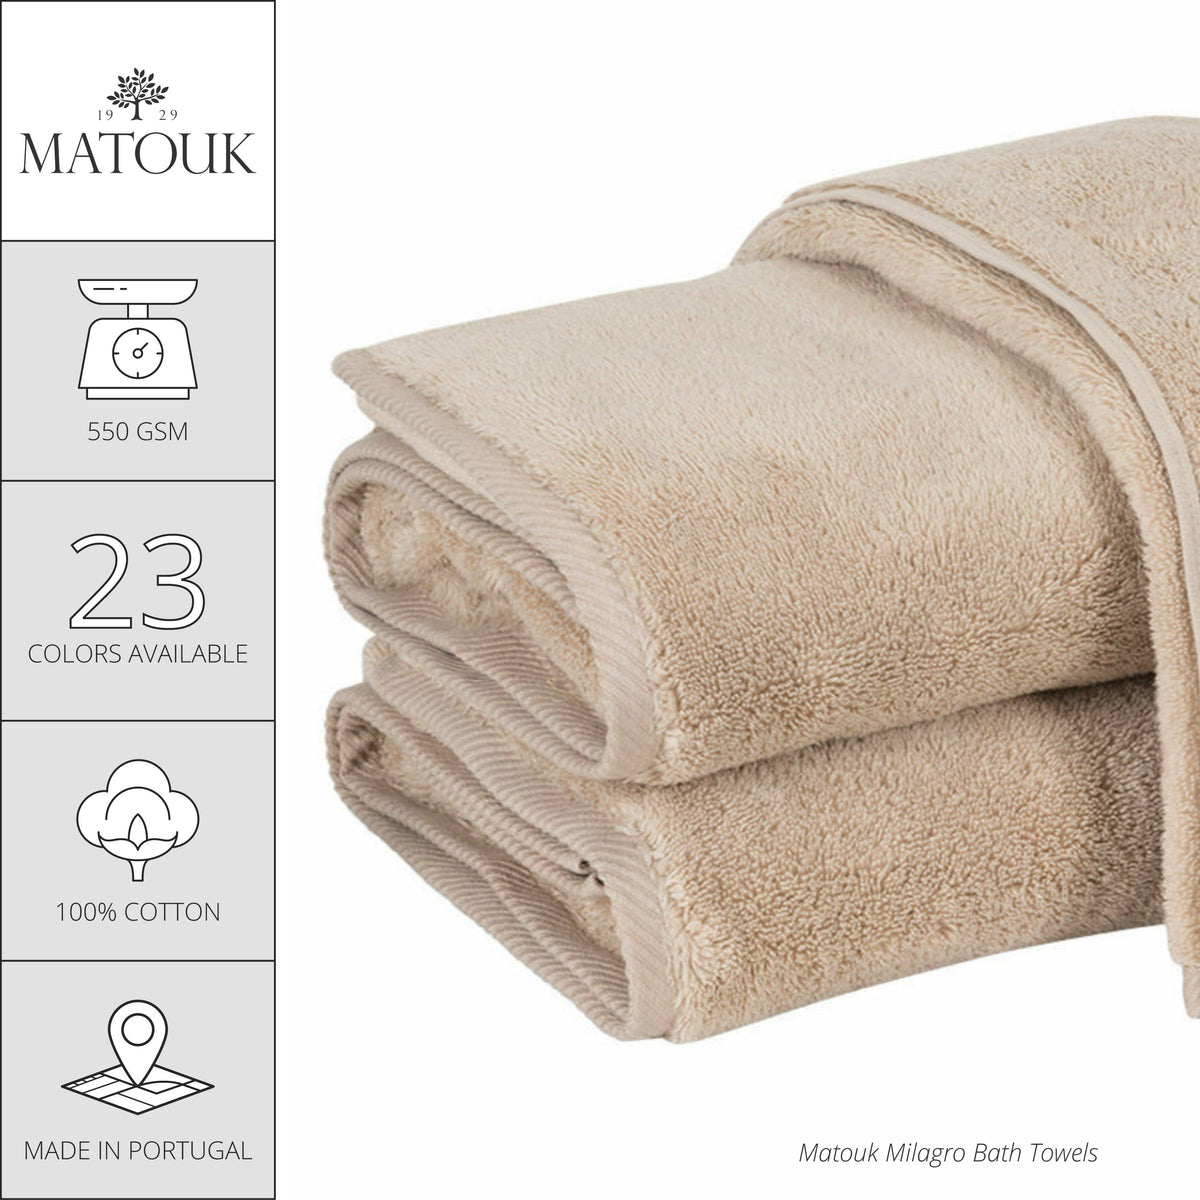 Matouk Milagro Bath Towels and Mats - Jade